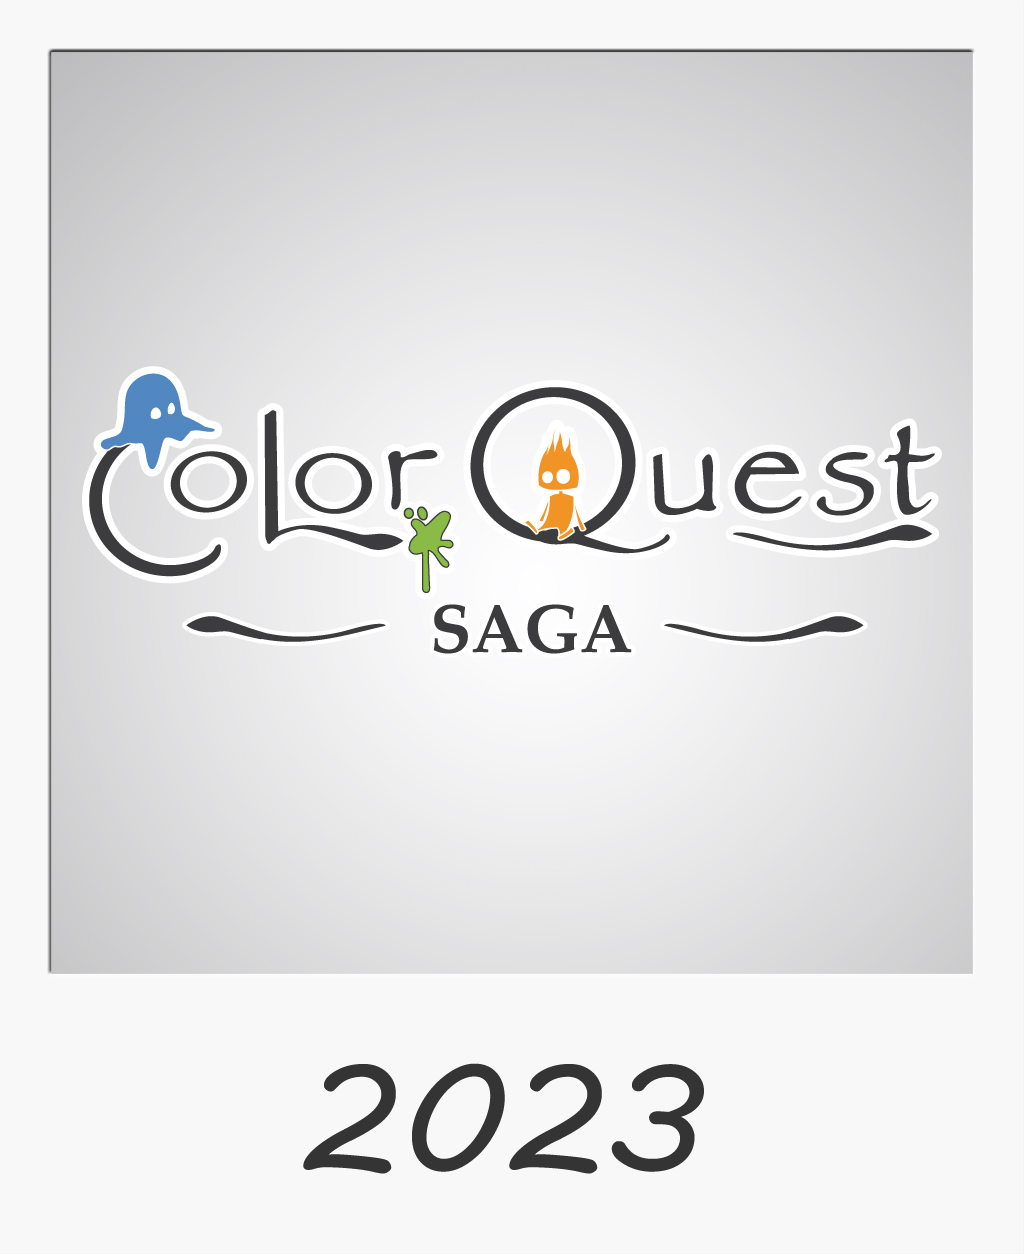 Color Quest Saga campaign